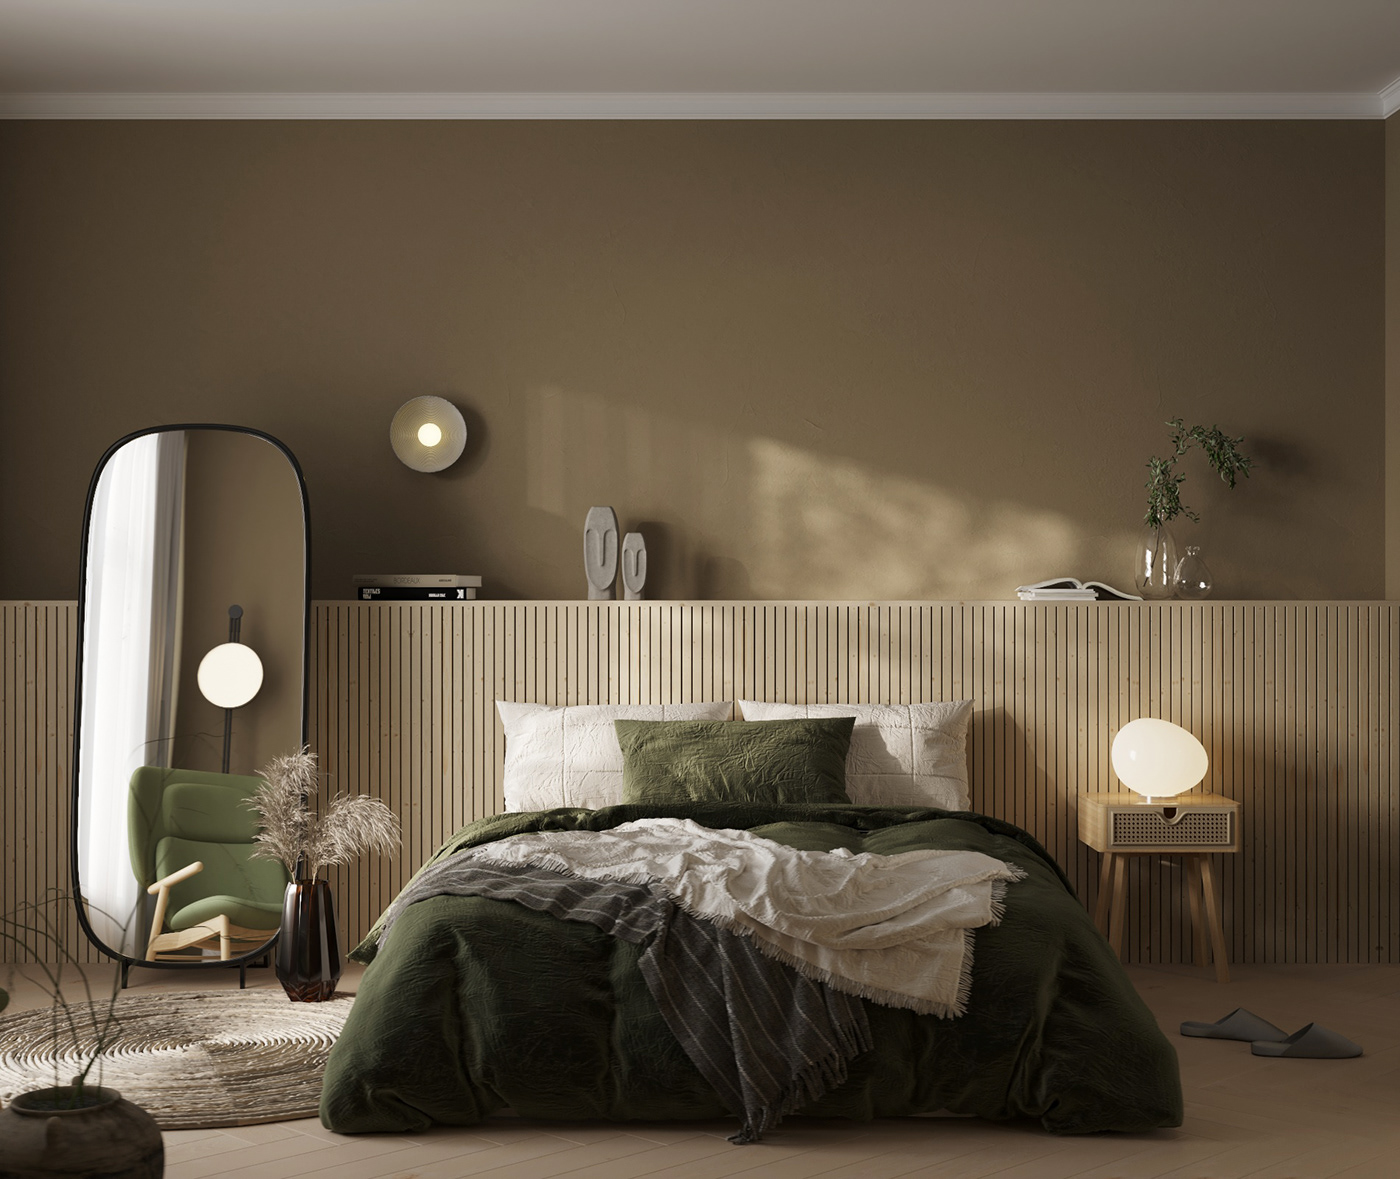 bedroom Interior 3ds max visualisation modern interor design